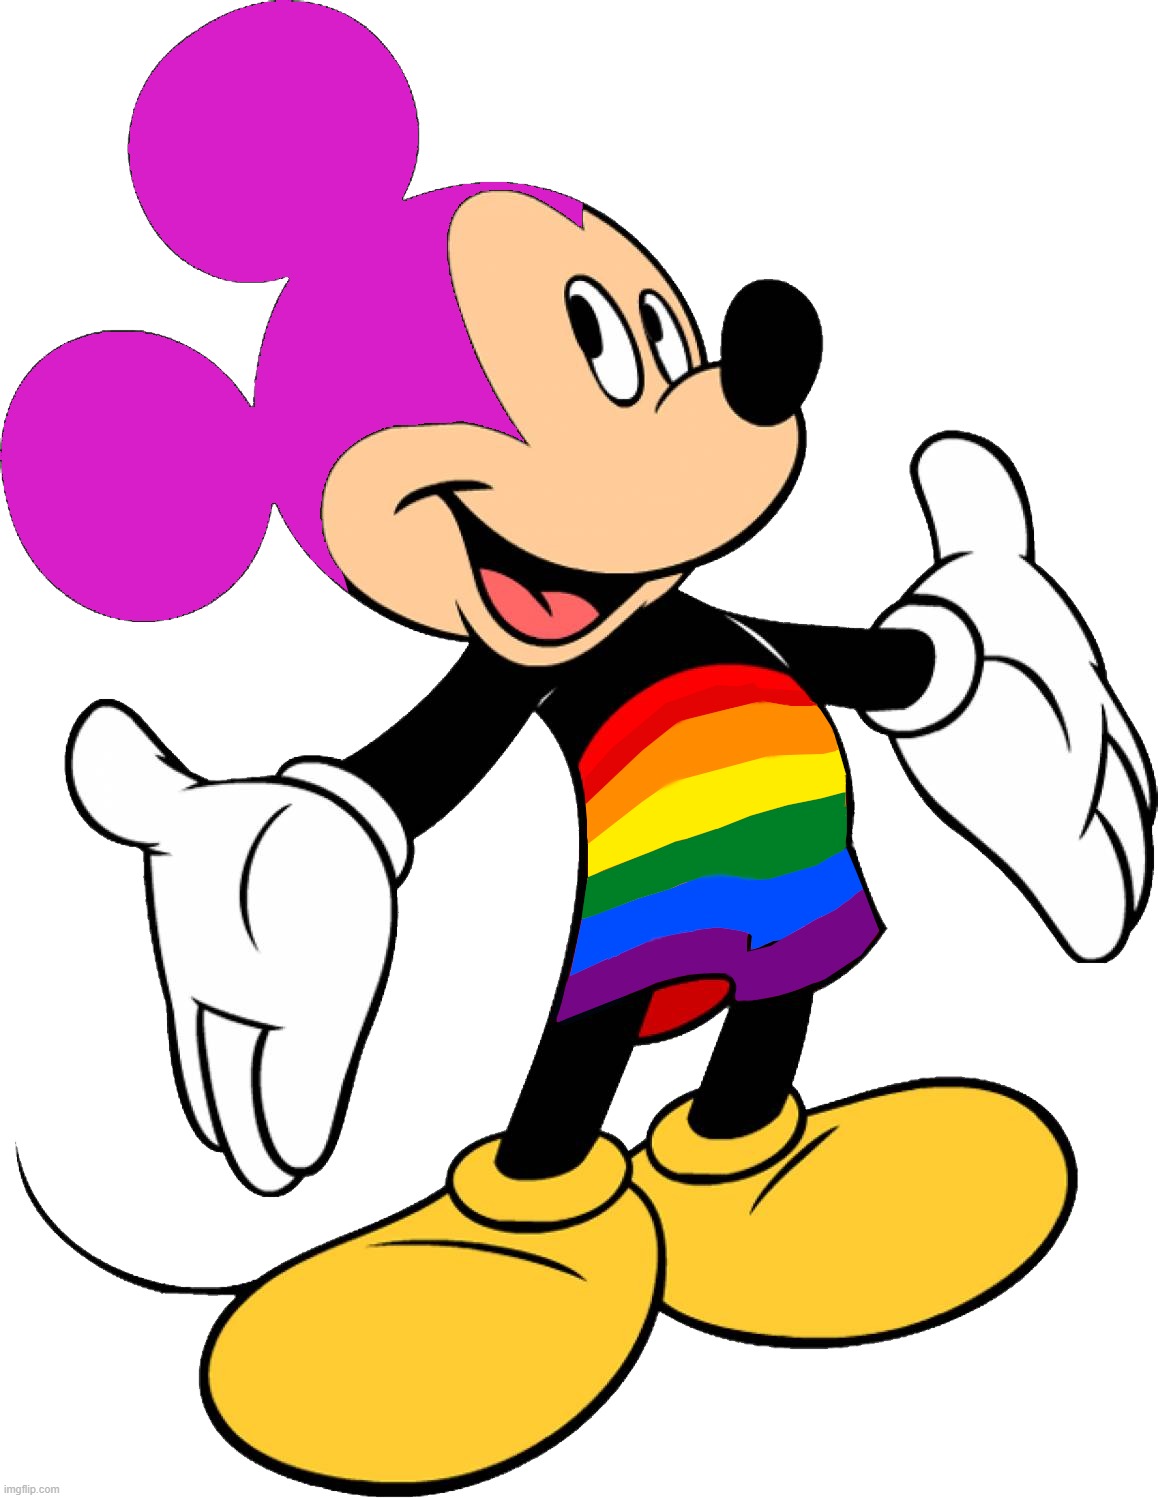 image tagged in mickey mouse,disney,gay,transgender,disneyland,disney world | made w/ Imgflip meme maker